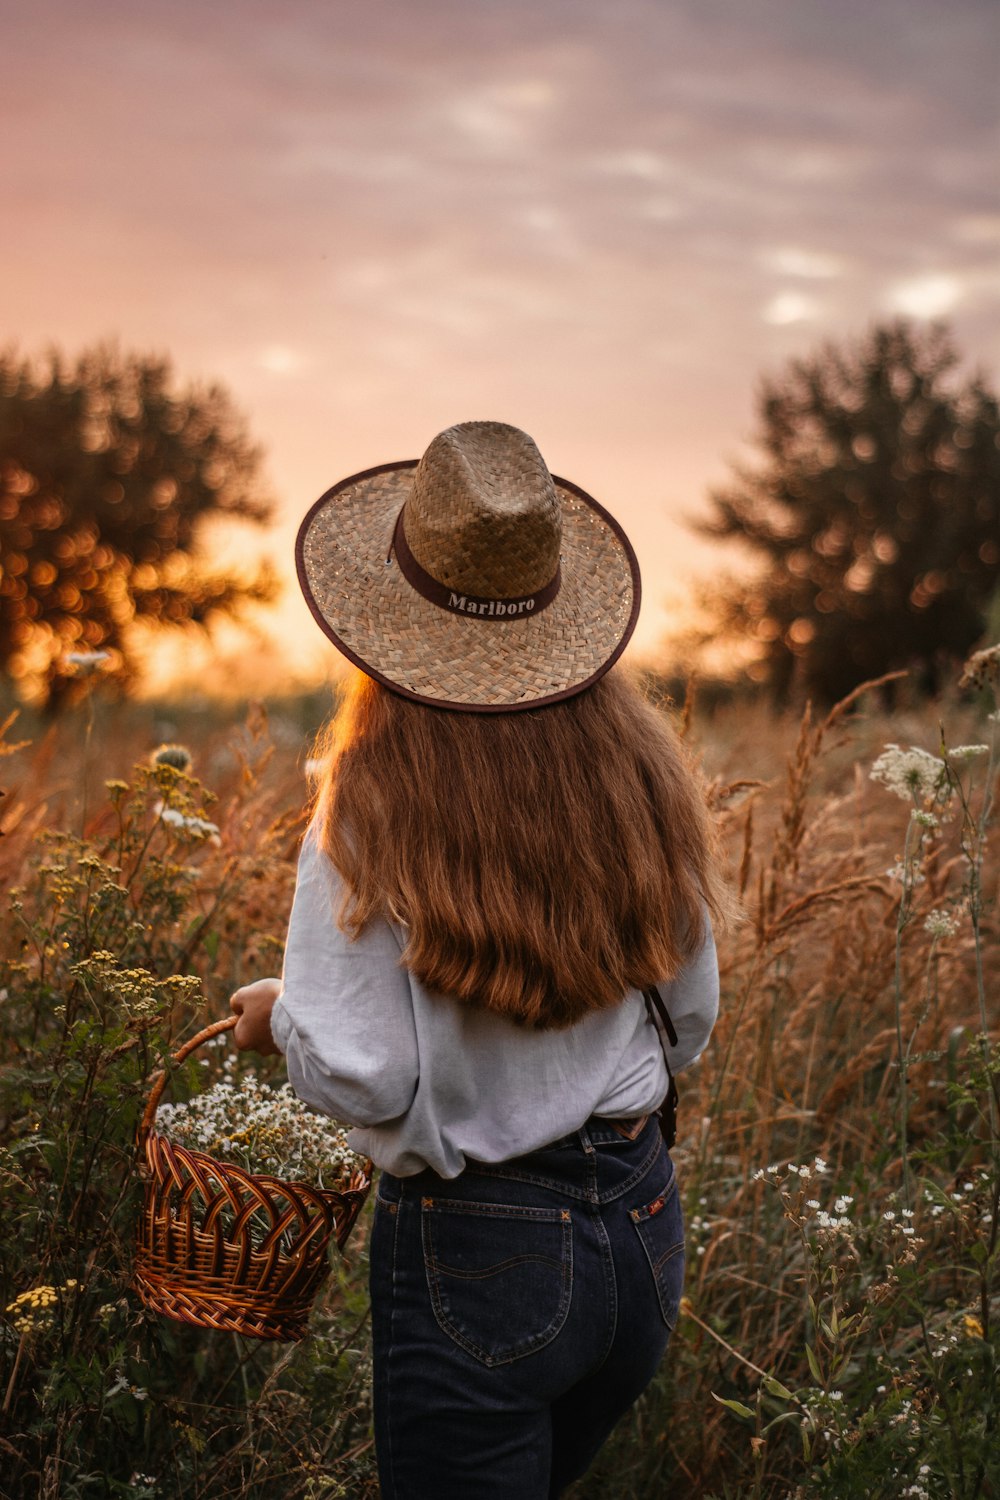 a woman in a hat is walking through a field